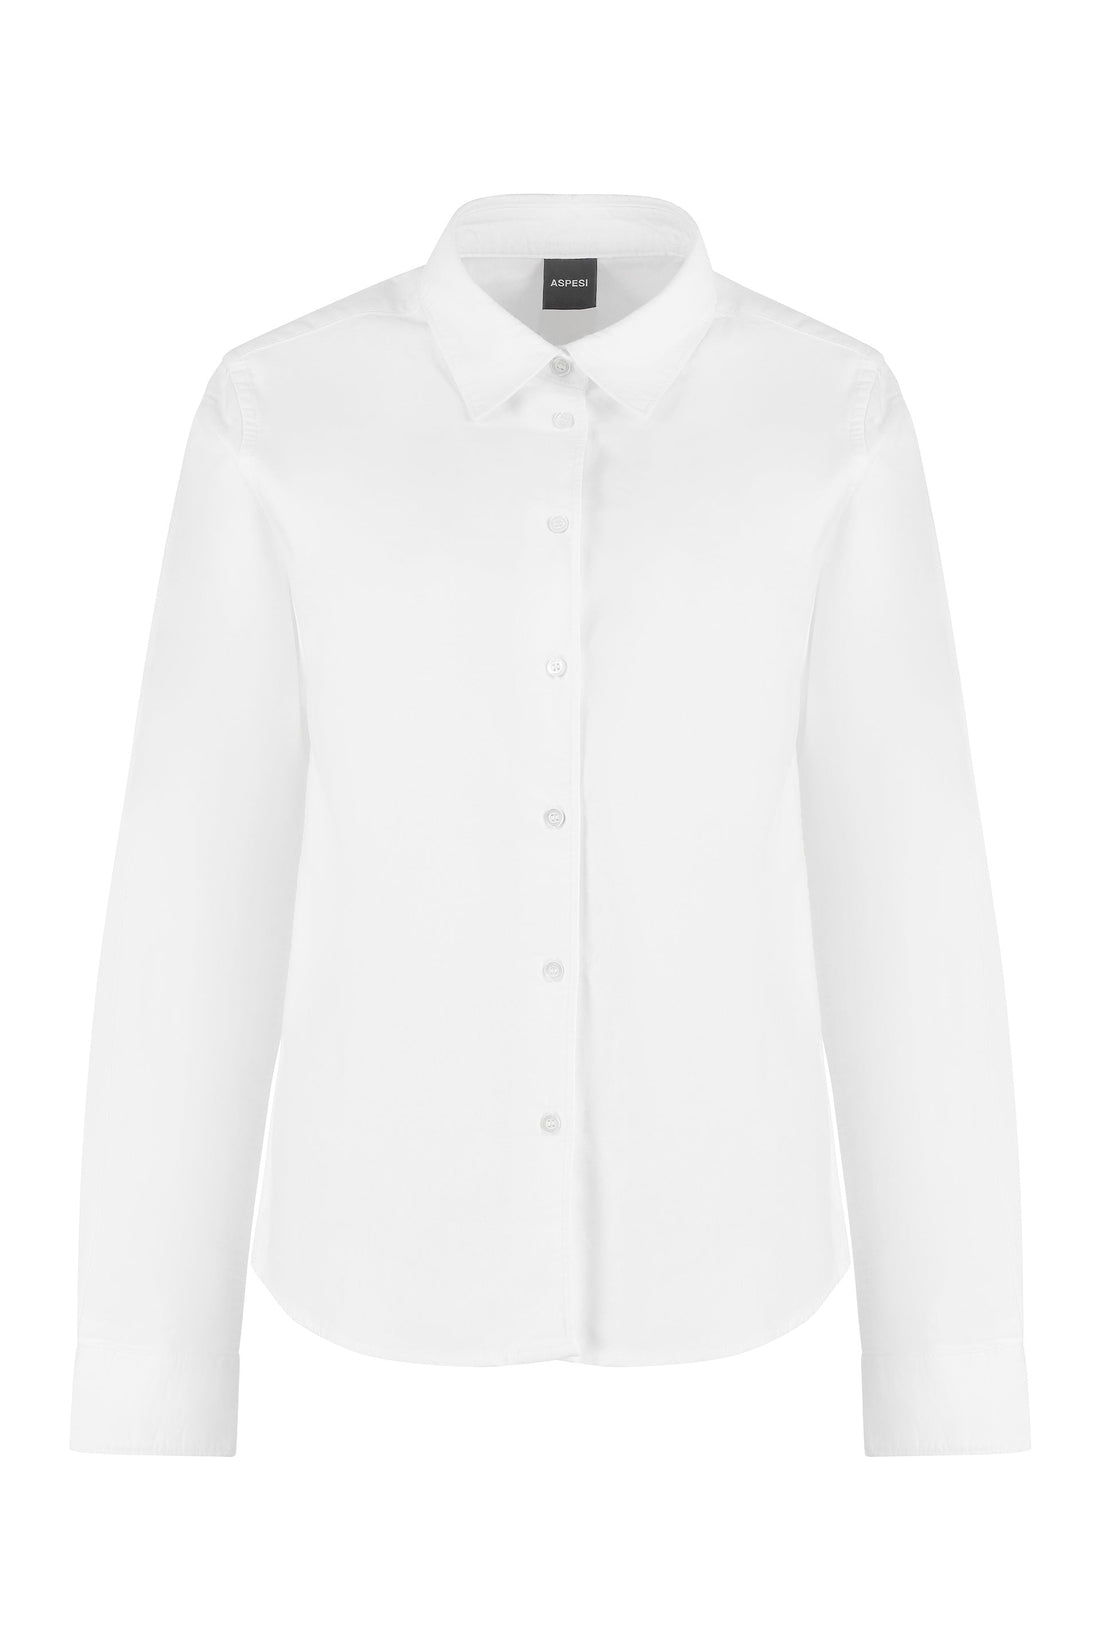 Aspesi-OUTLET-SALE-Cotton poplin shirt-ARCHIVIST